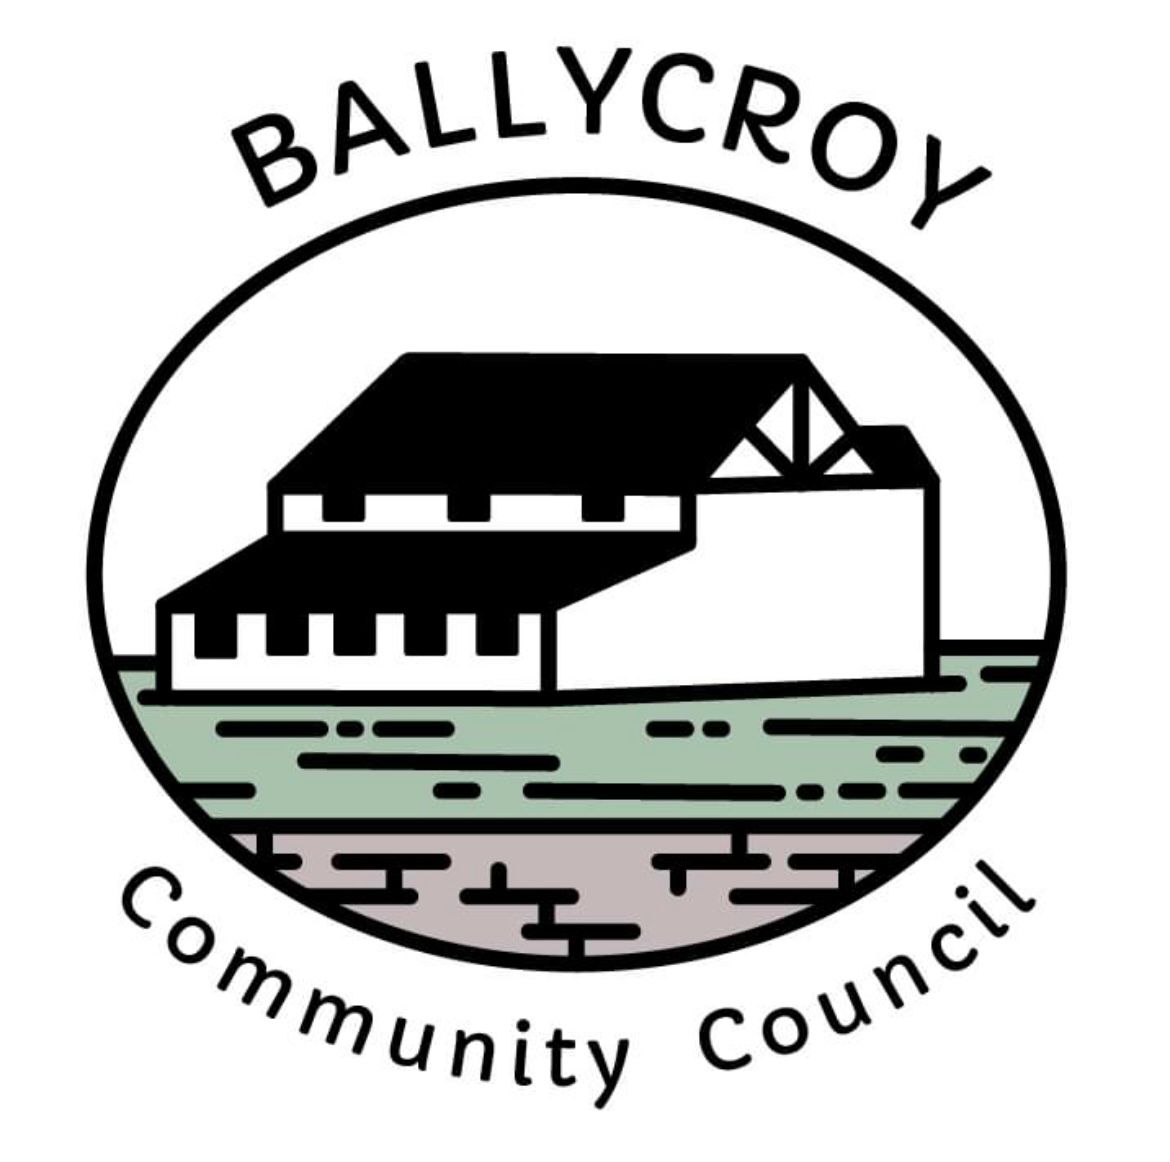 Ballycroy Community Council